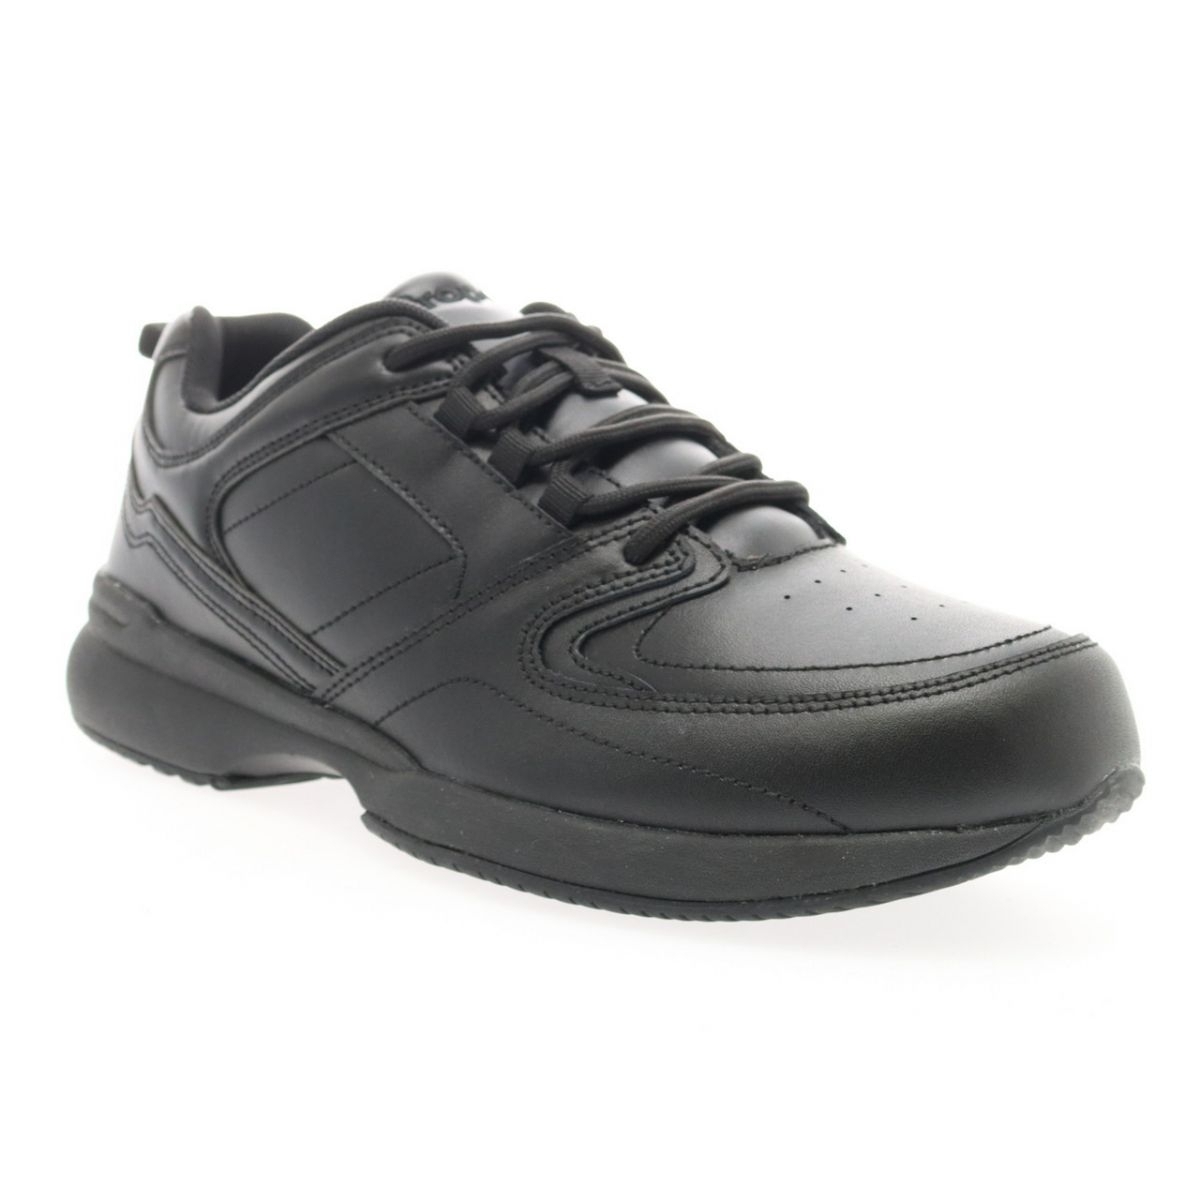 Propet Men's Life Walker Sport Sneaker Black - MAA272LBLK BLACK - BLACK, 9.5 Wide